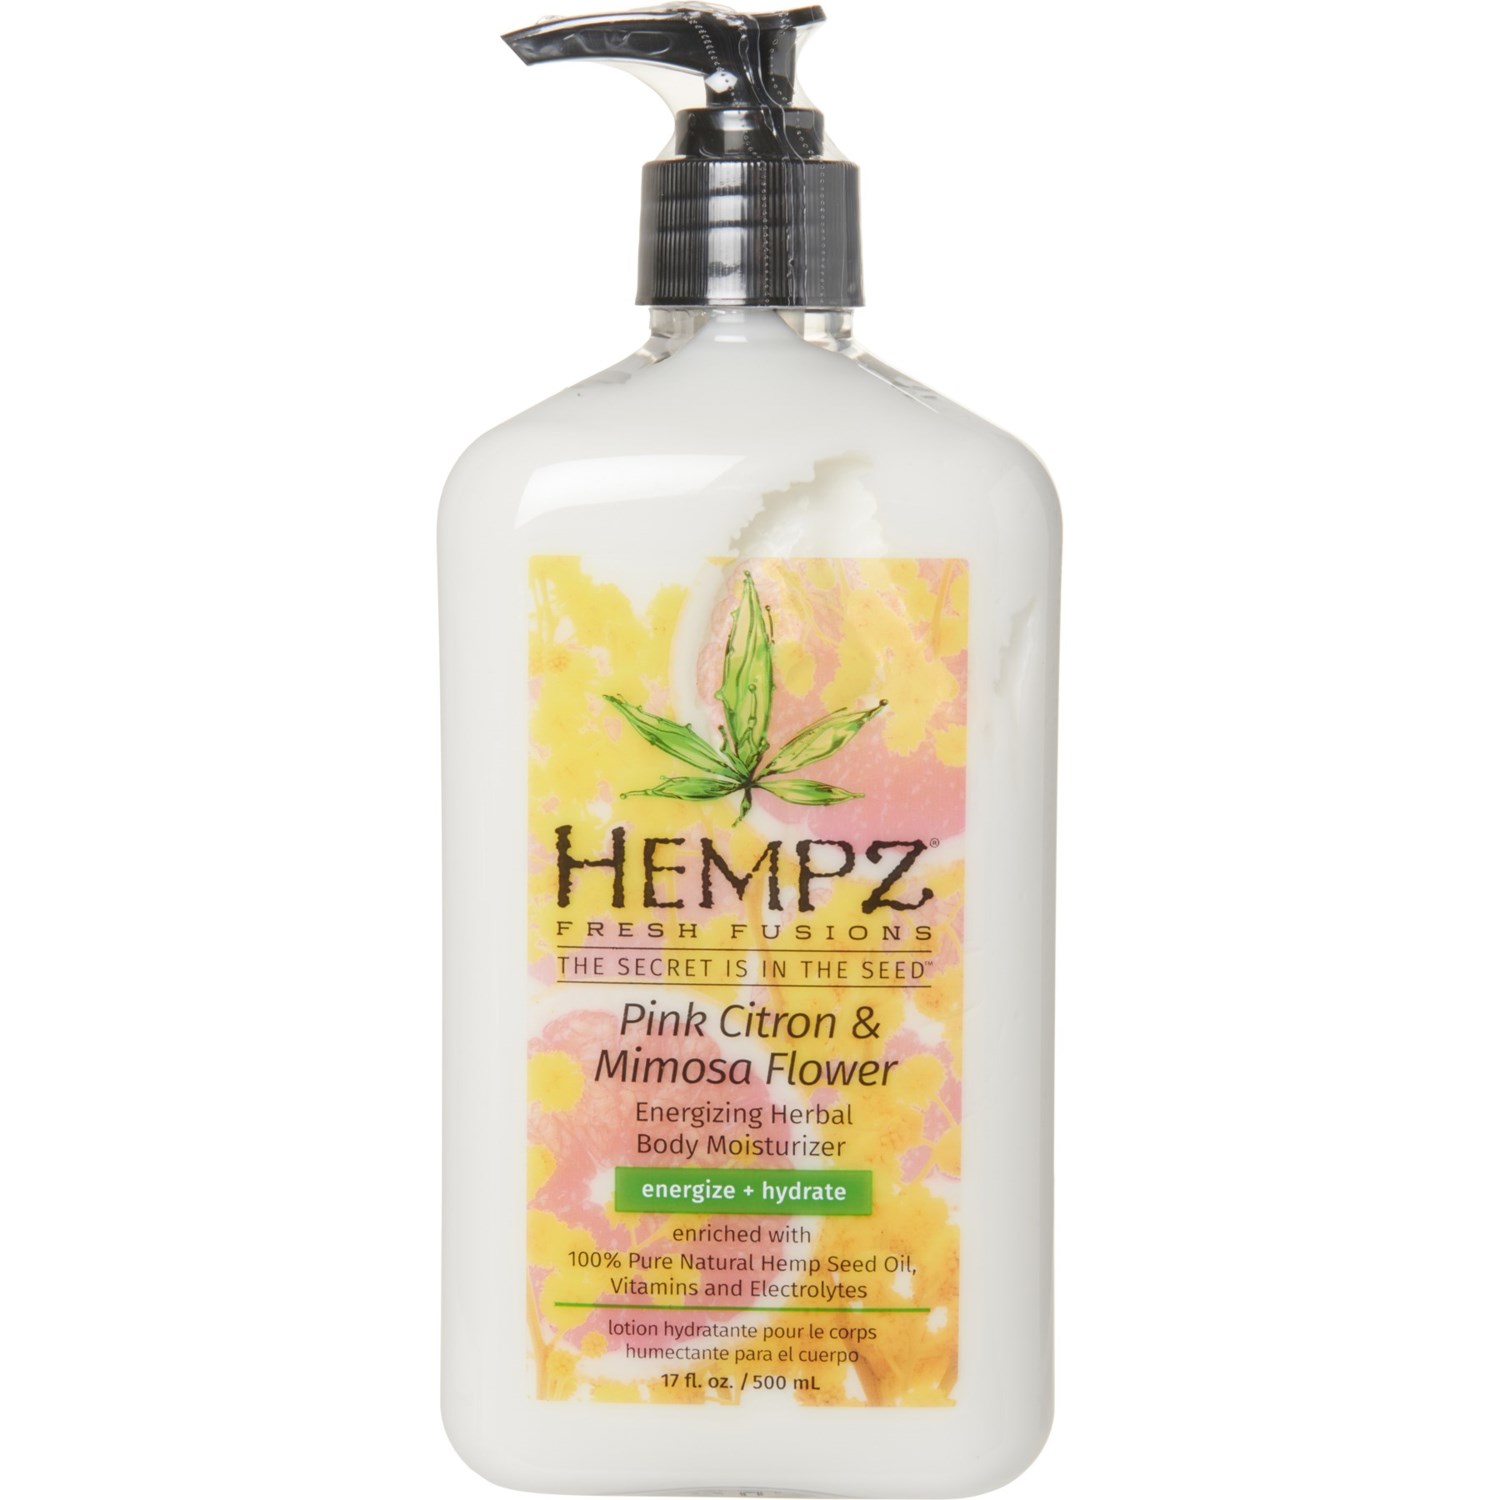 Hempz Fresh Fusions Pink Citron and Mimosa Flower Herbal Body Moisturizer - 17 oz.